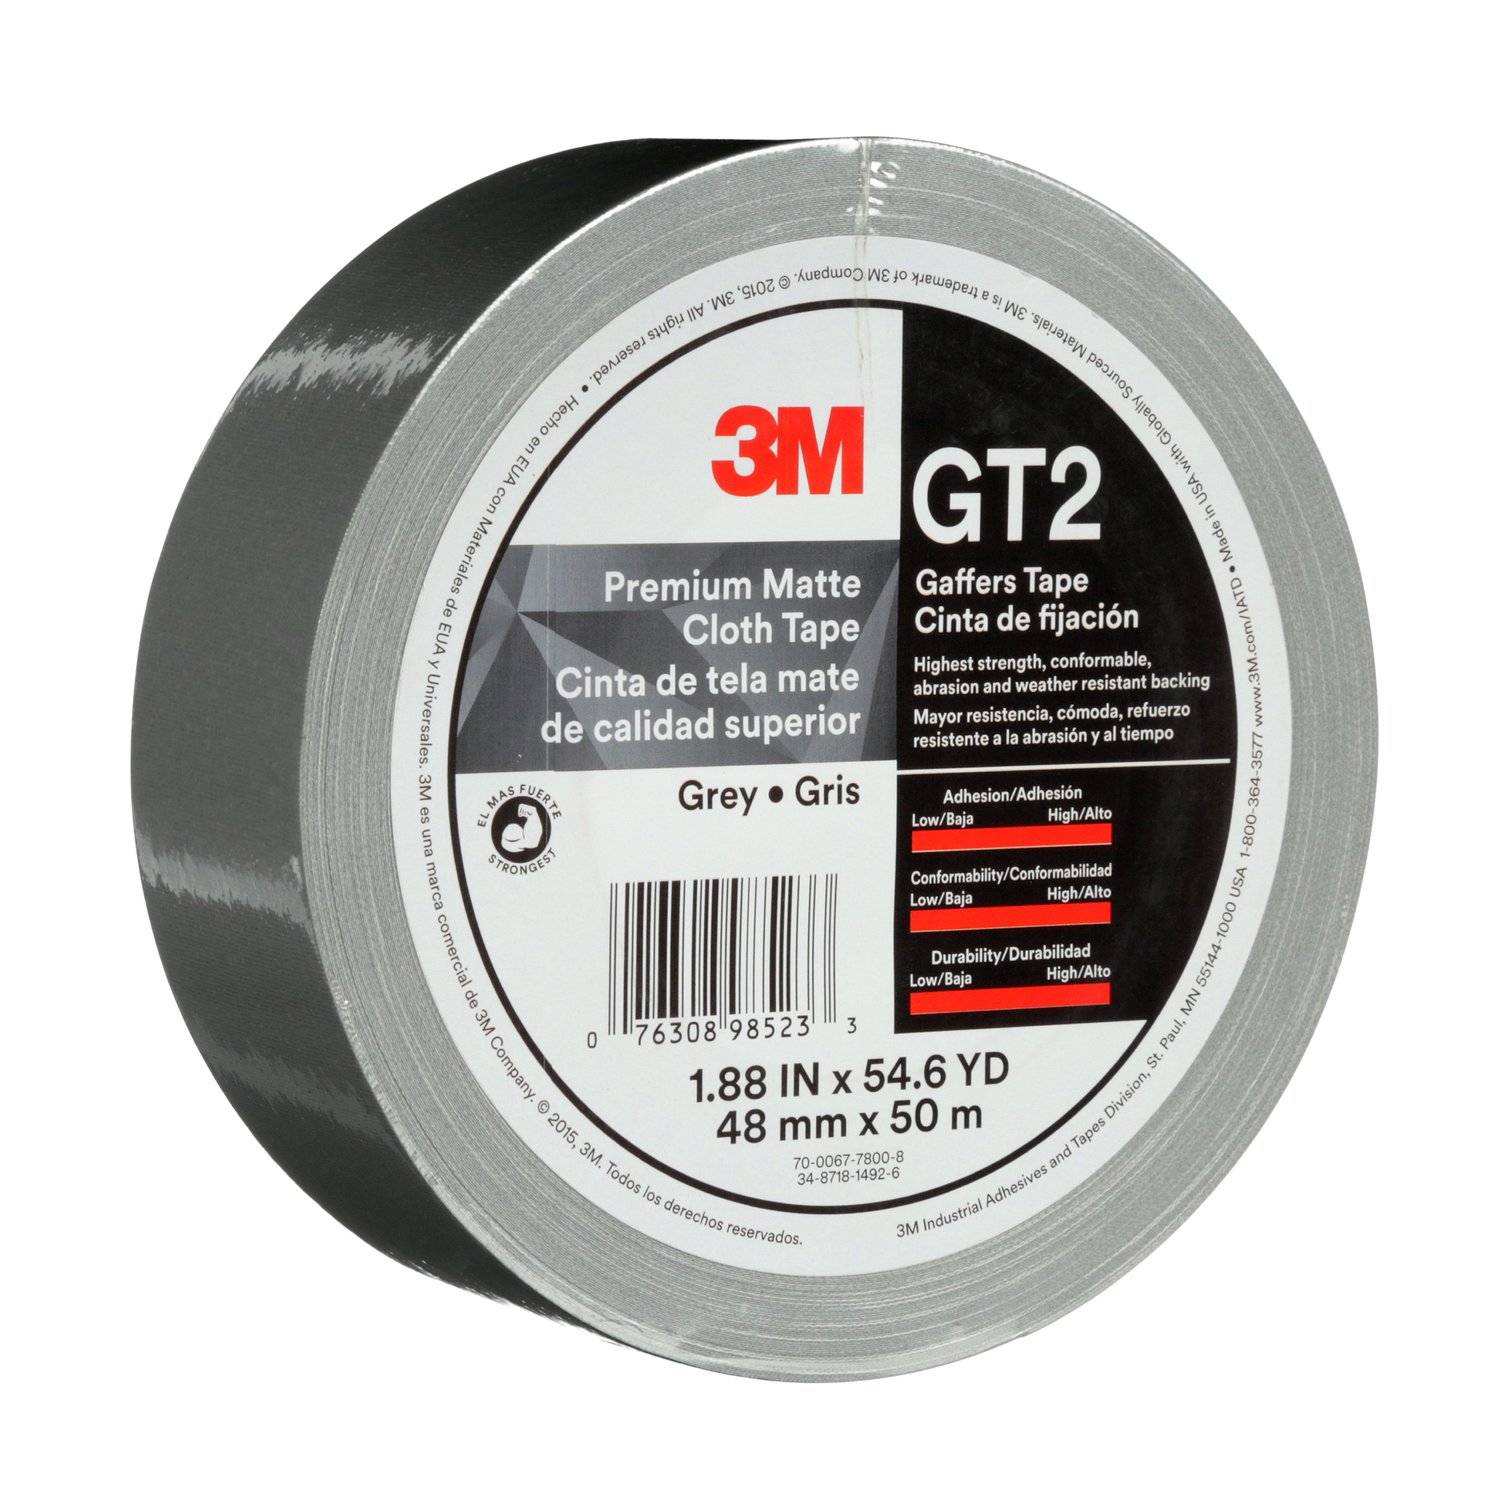 7010375518 - 3M Premium Matte Cloth (Gaffers) Tape GT2, Grey, 48 mm x 50 m, 11 mil,
24/Case